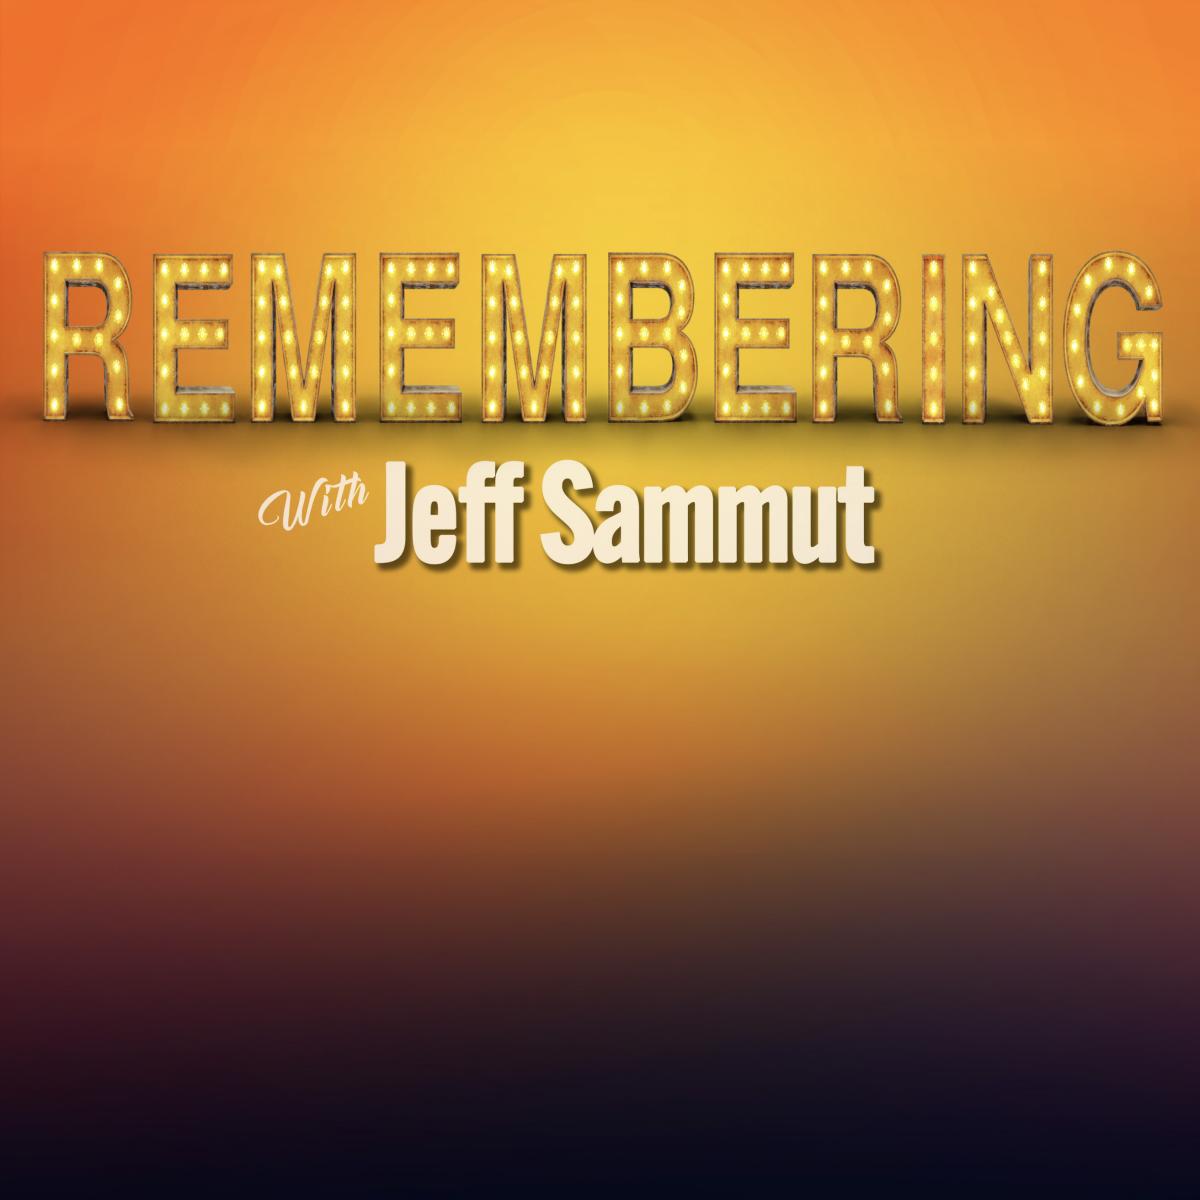 Jeff Sammut